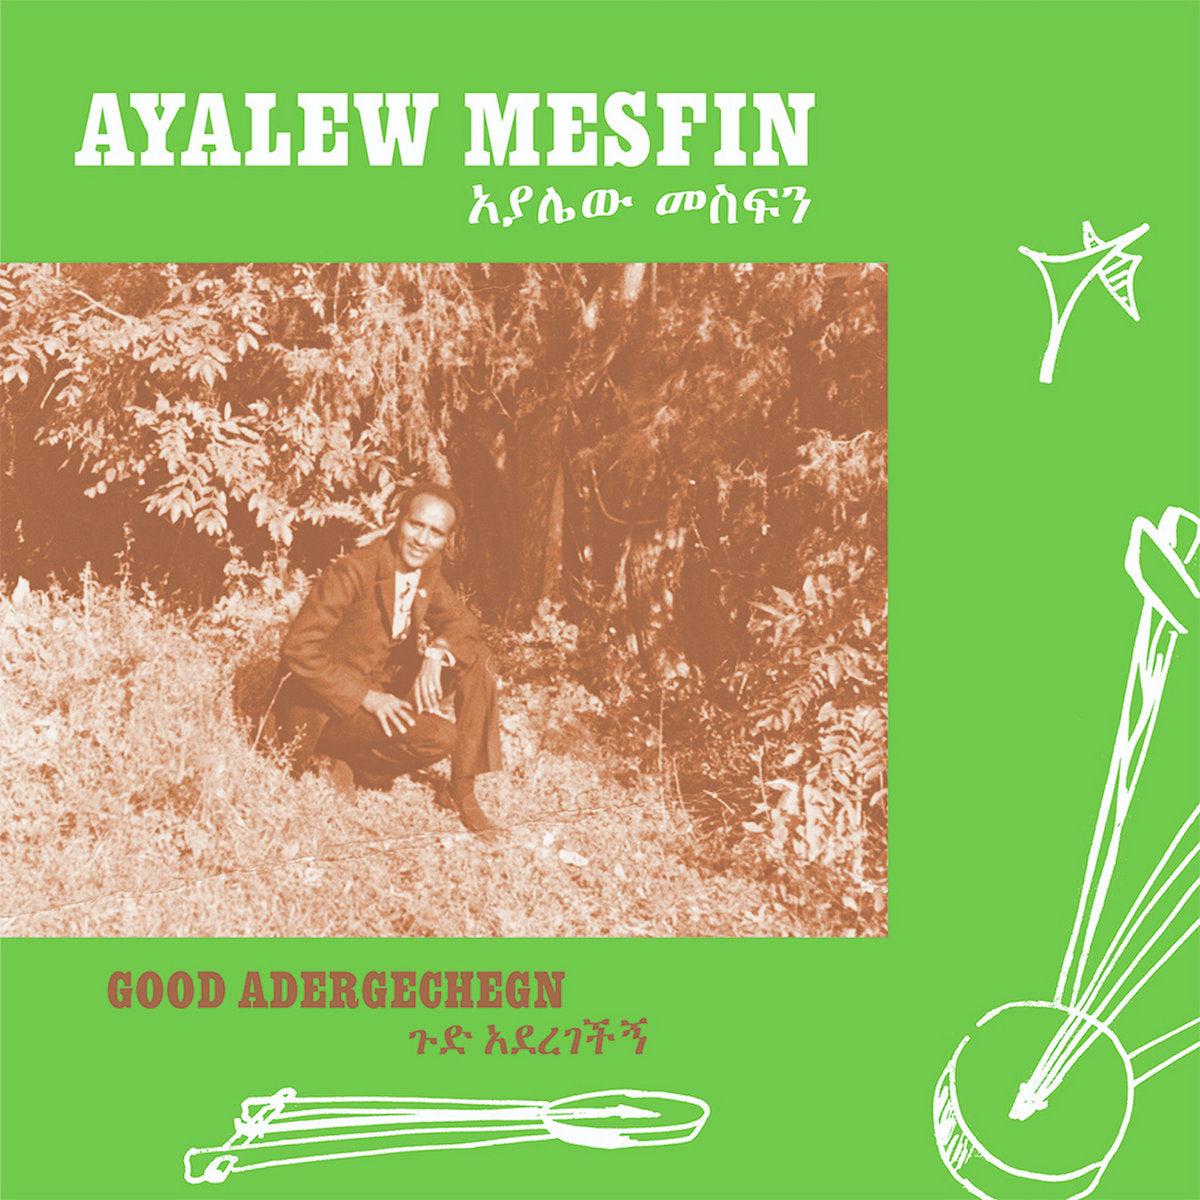 Mesfin, Ayalew "Good Aderegechegn (Blindsided By Love)"